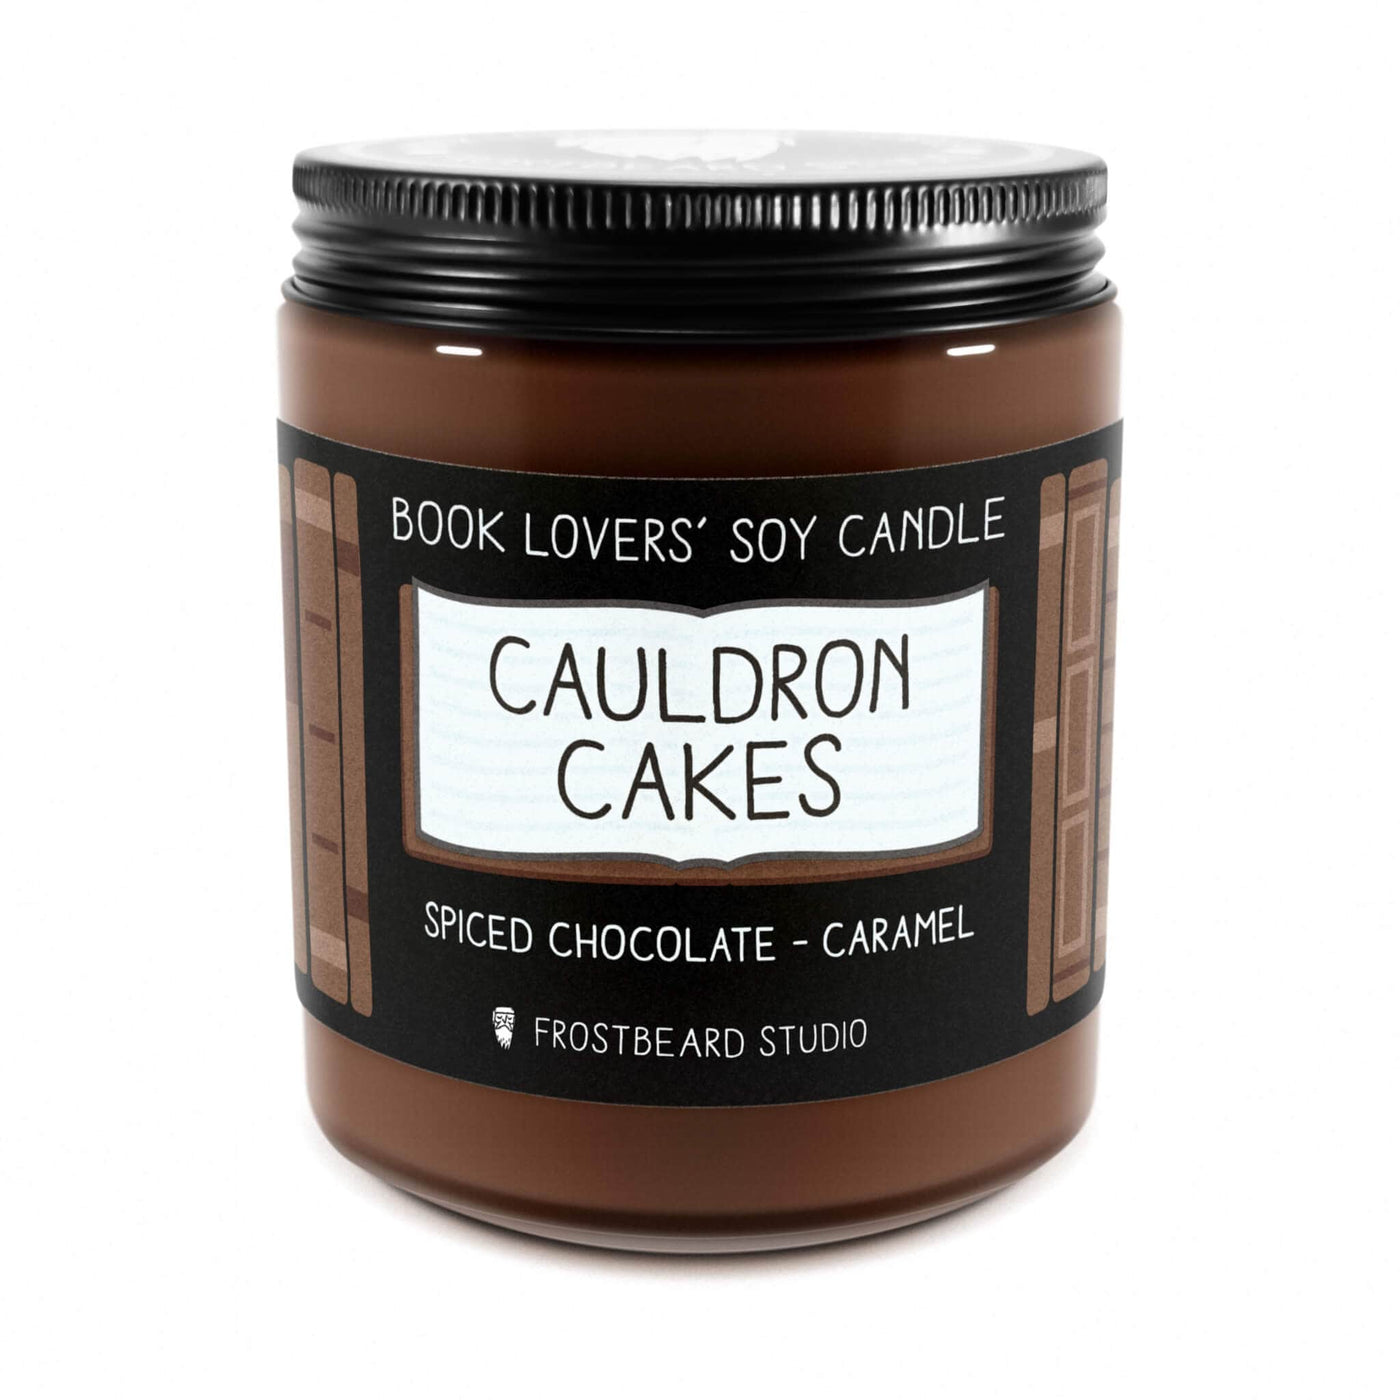 Cauldron Cakes  -  8 oz Jar  -  Book Lovers' Soy Candle  -  Frostbeard Studio